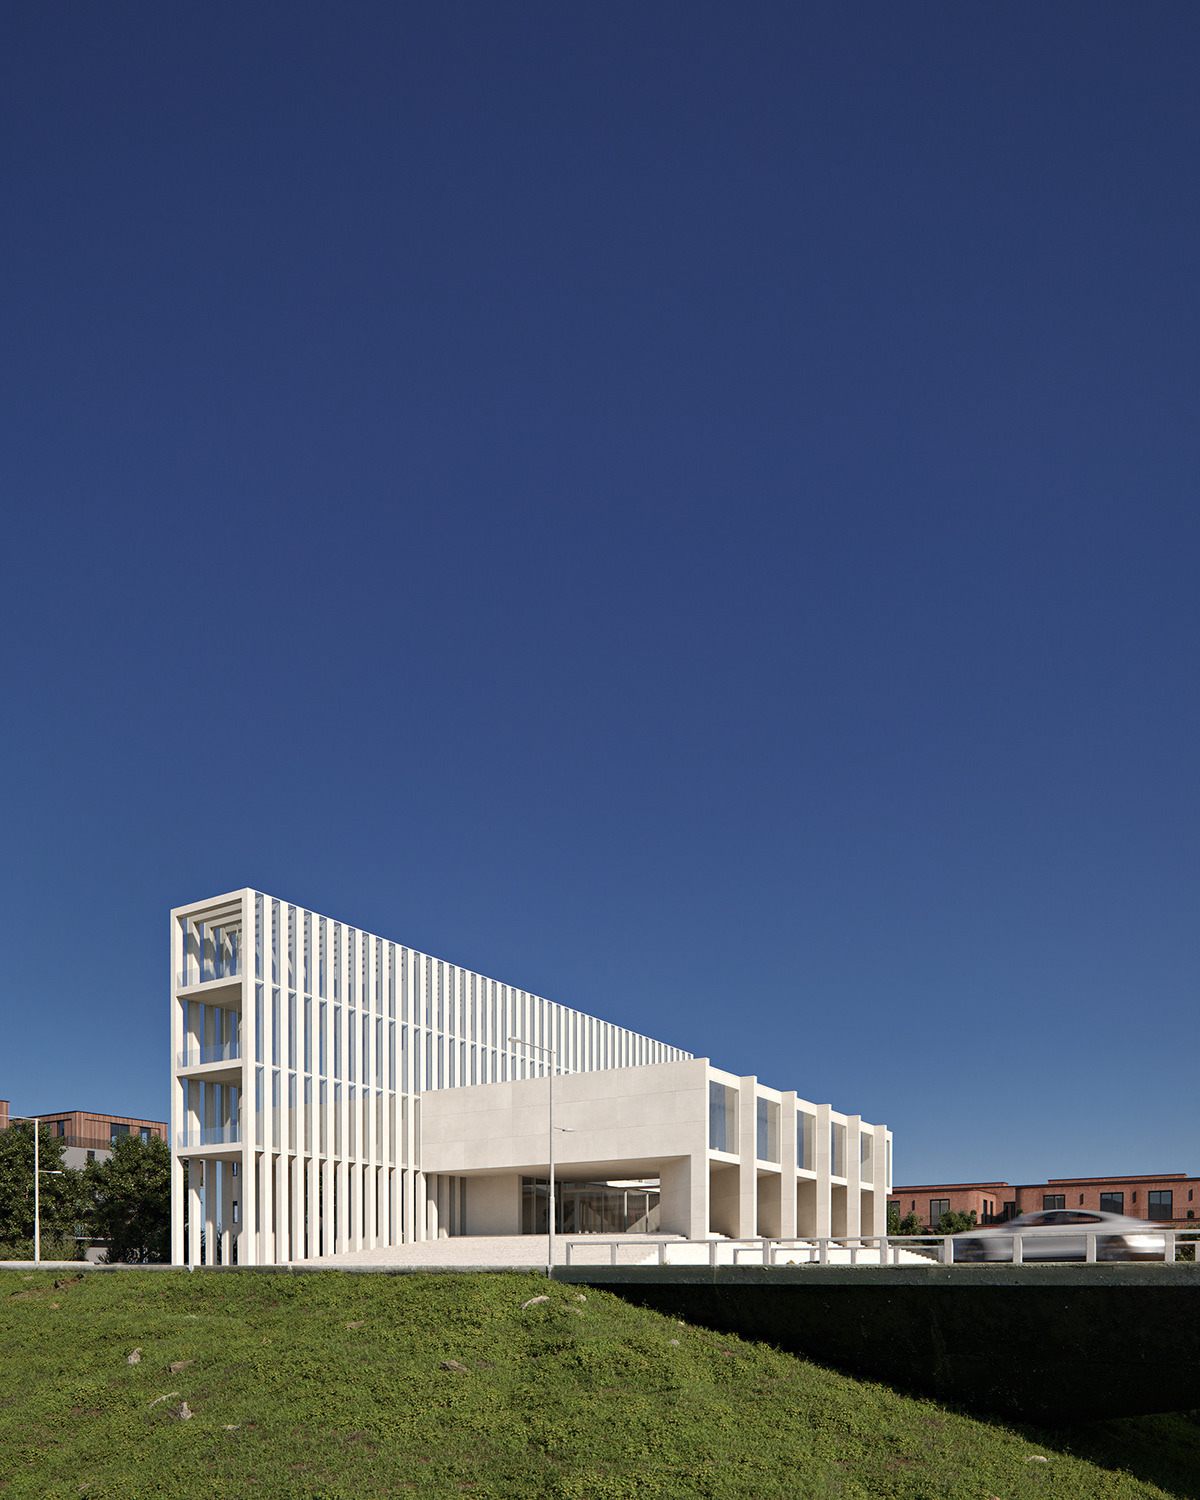 architectural architecture archviz building CGI coronarenderer Exhibition Center exterior Minimalism visualization